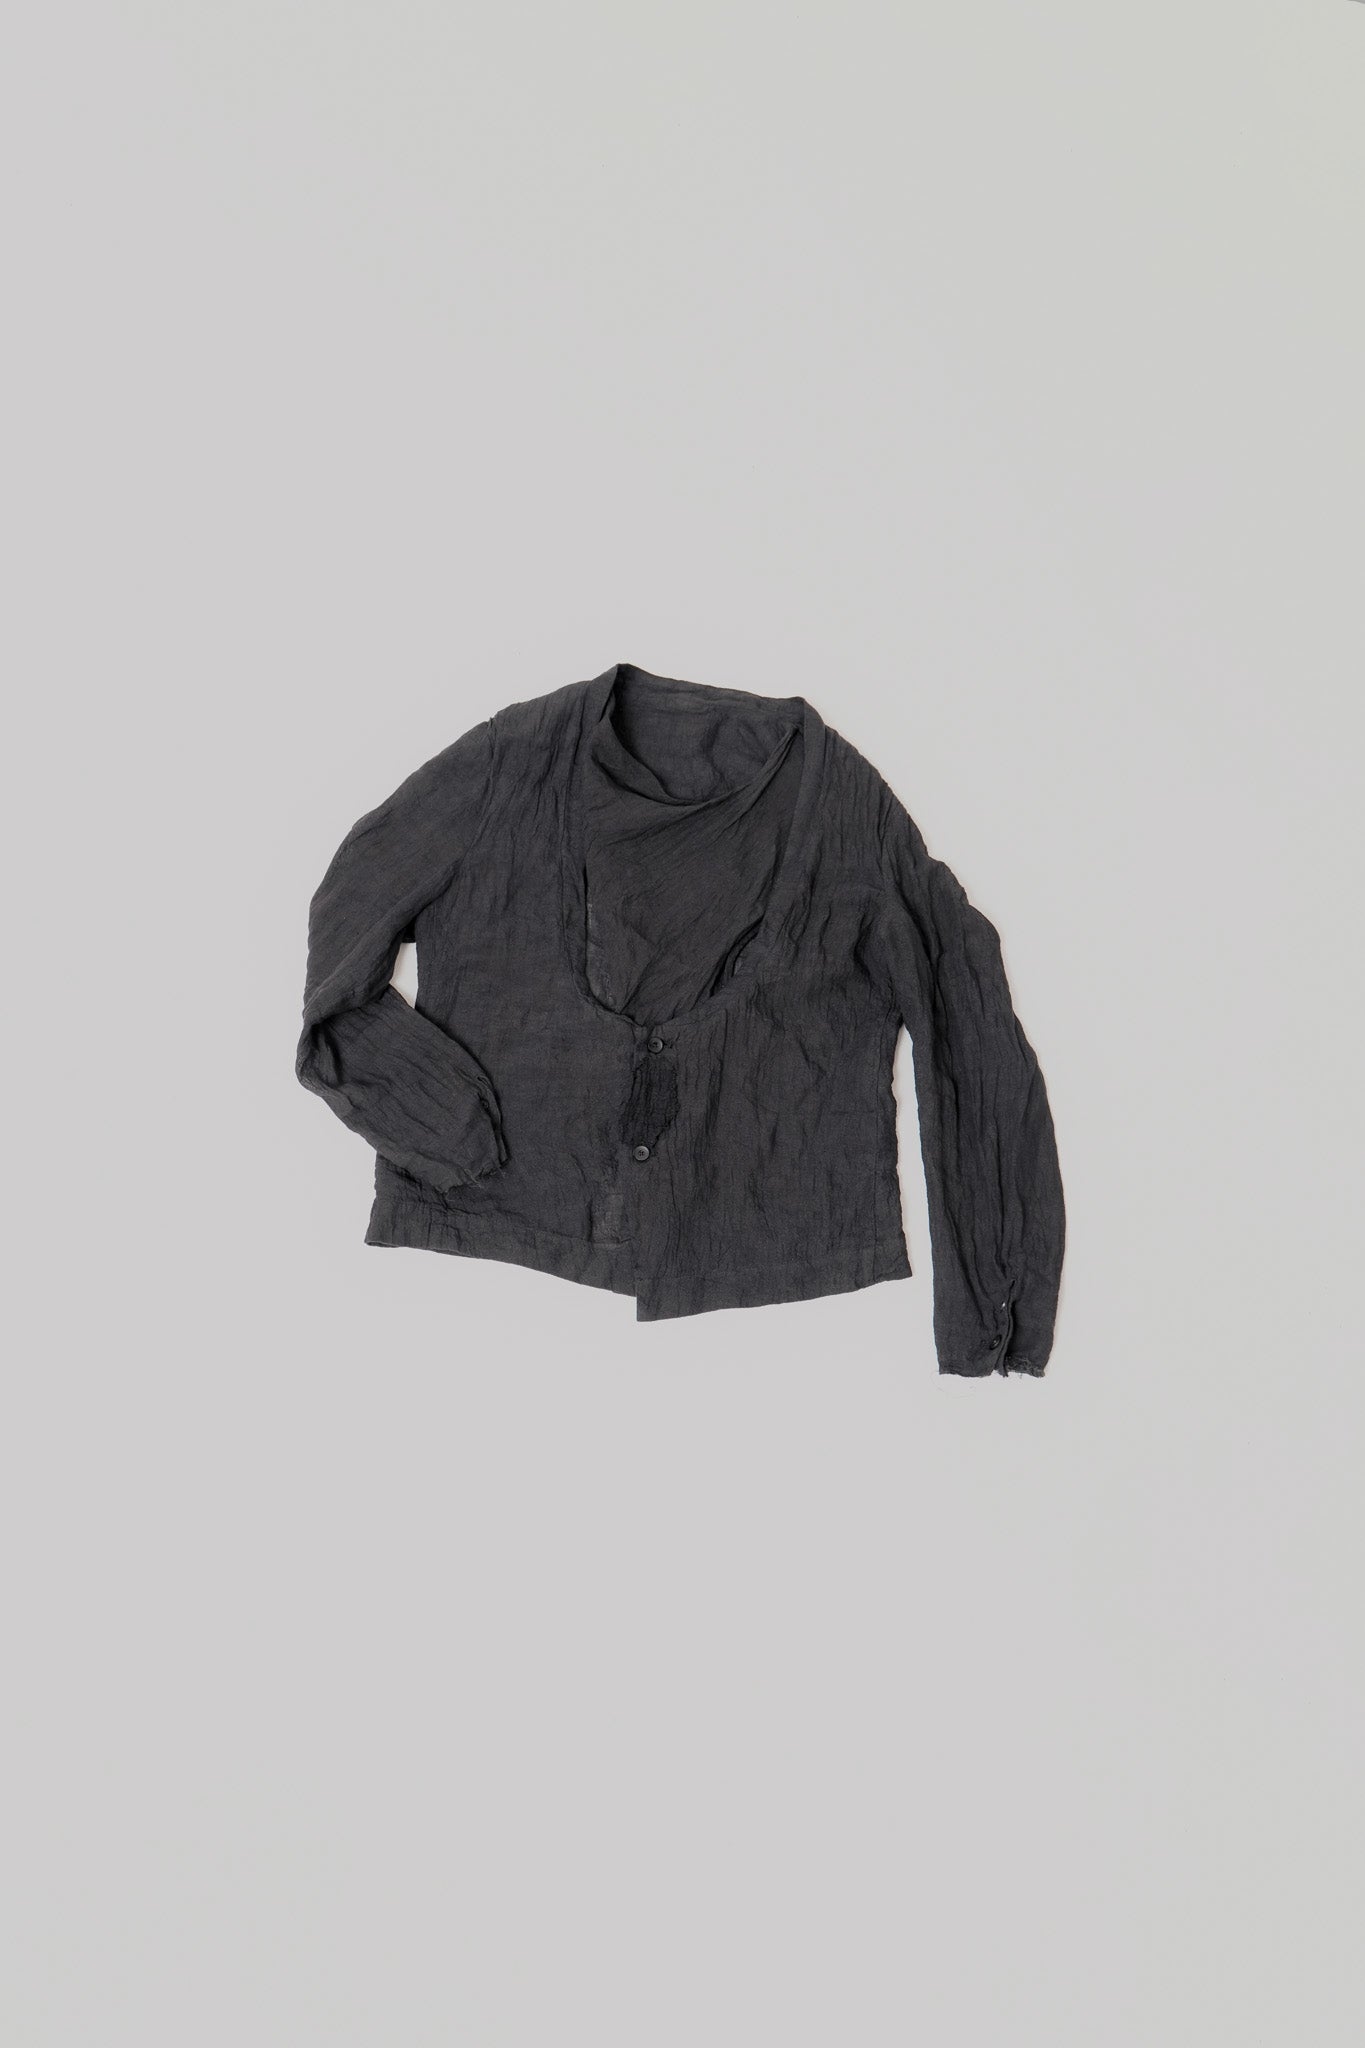 043 - Draped Vest Jacket in Linen